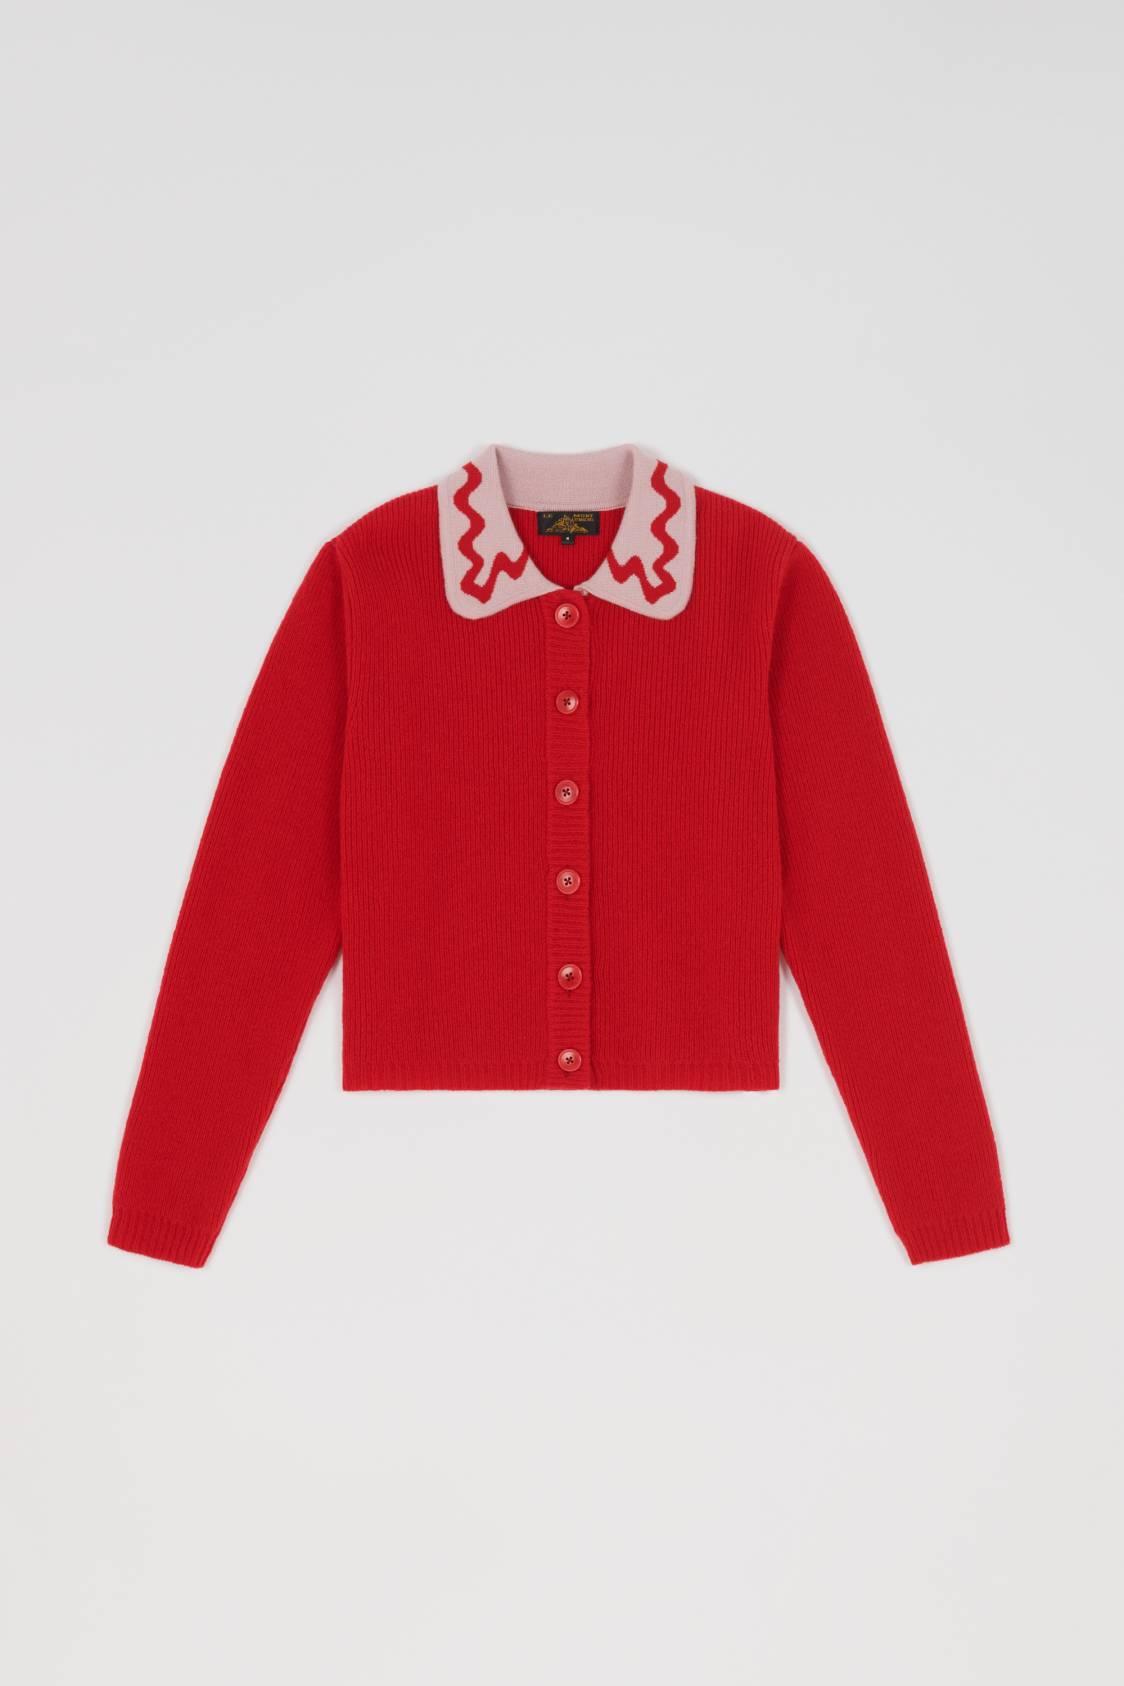 Le Mont Saint Michel Grania - Fancy Collar Sweater